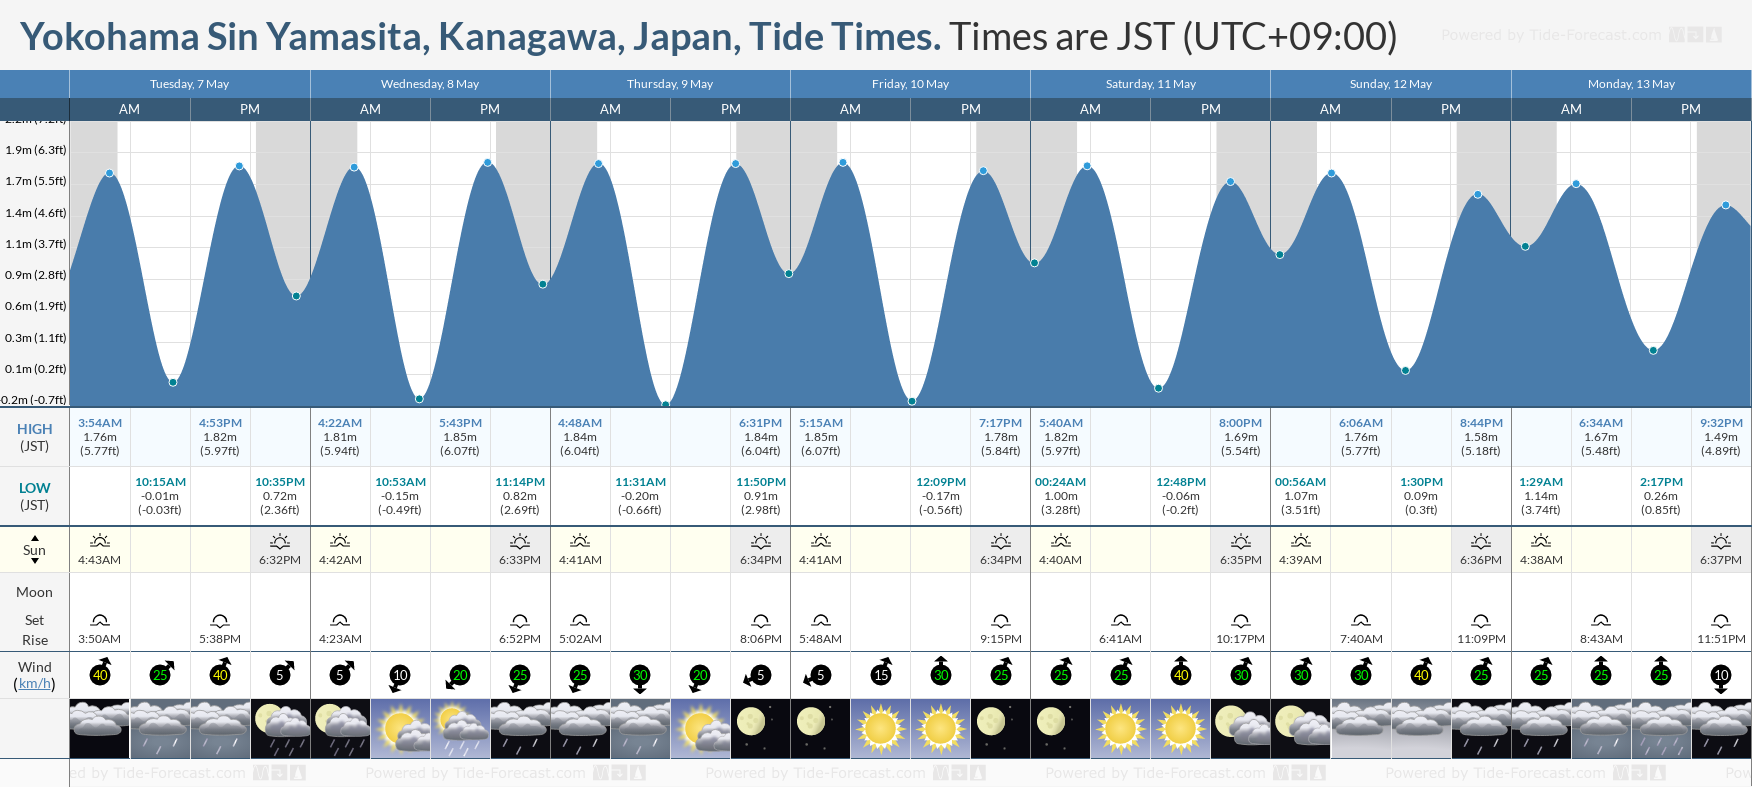 Yokohama Sin Yamasita, Kanagawa, Japan Tide Chart including high and low tide tide times for the next 7 days